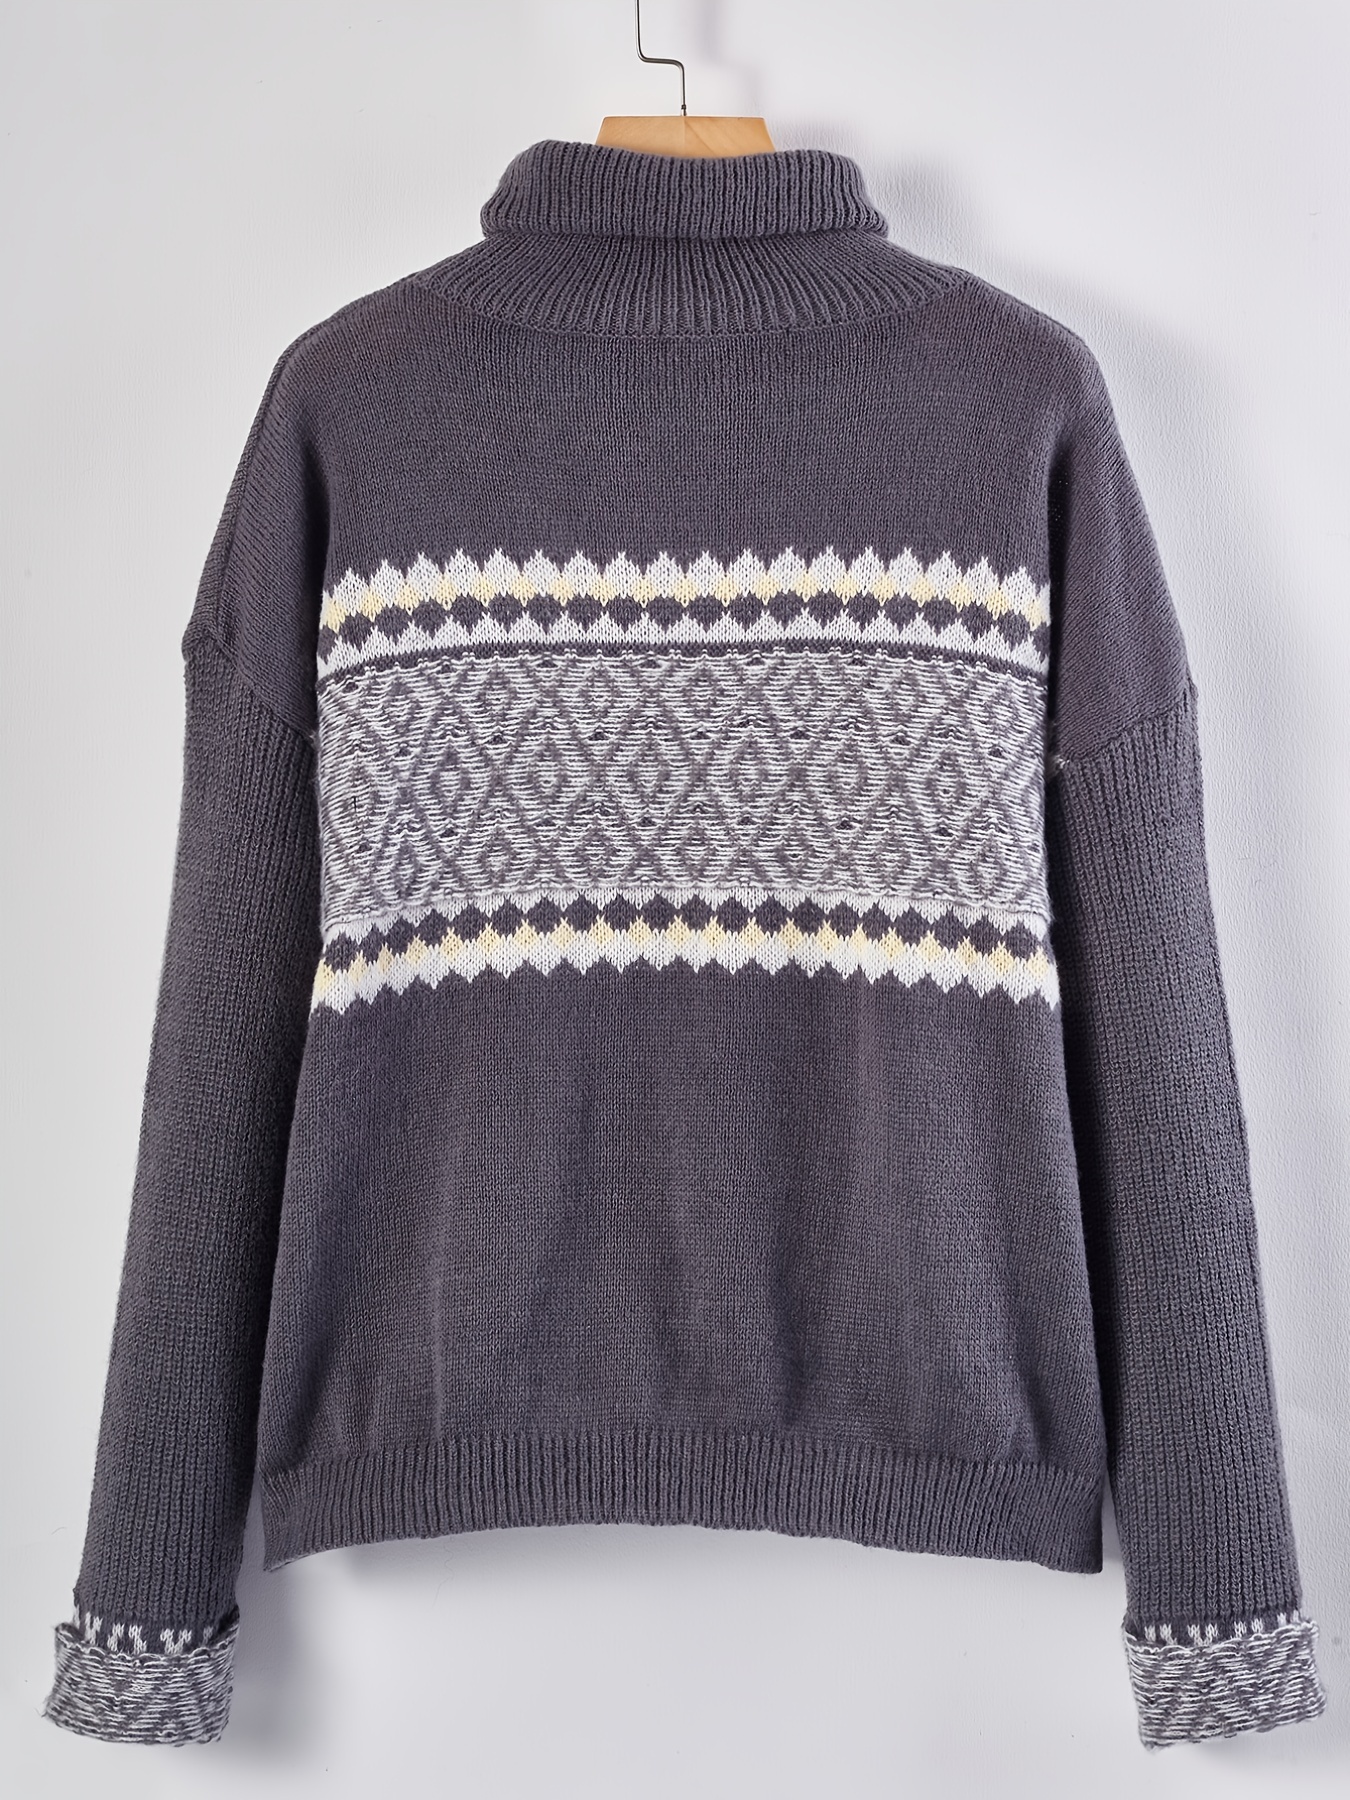 High neck jacquard knit sweater